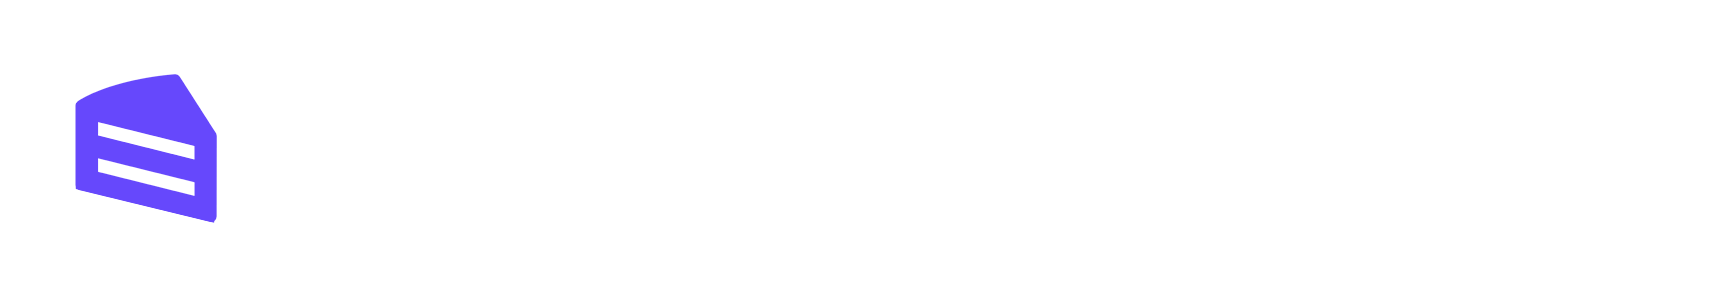 Cakebar Digital Logo